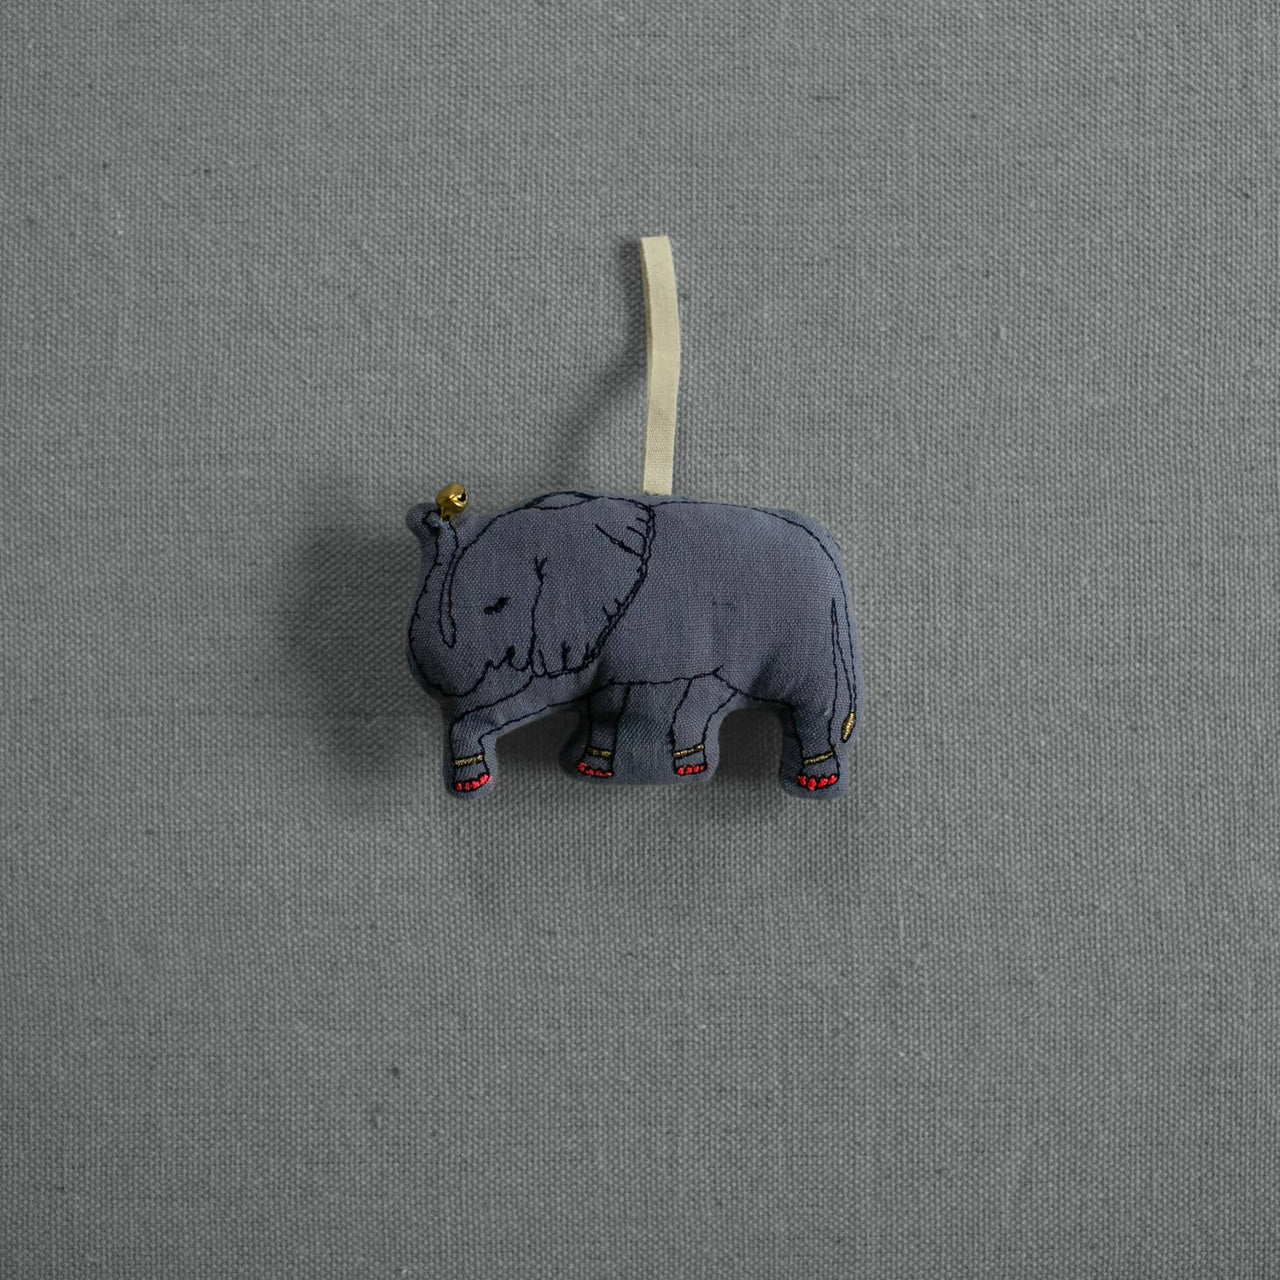 SALE - Skippy Cotton - Elephant Ornament